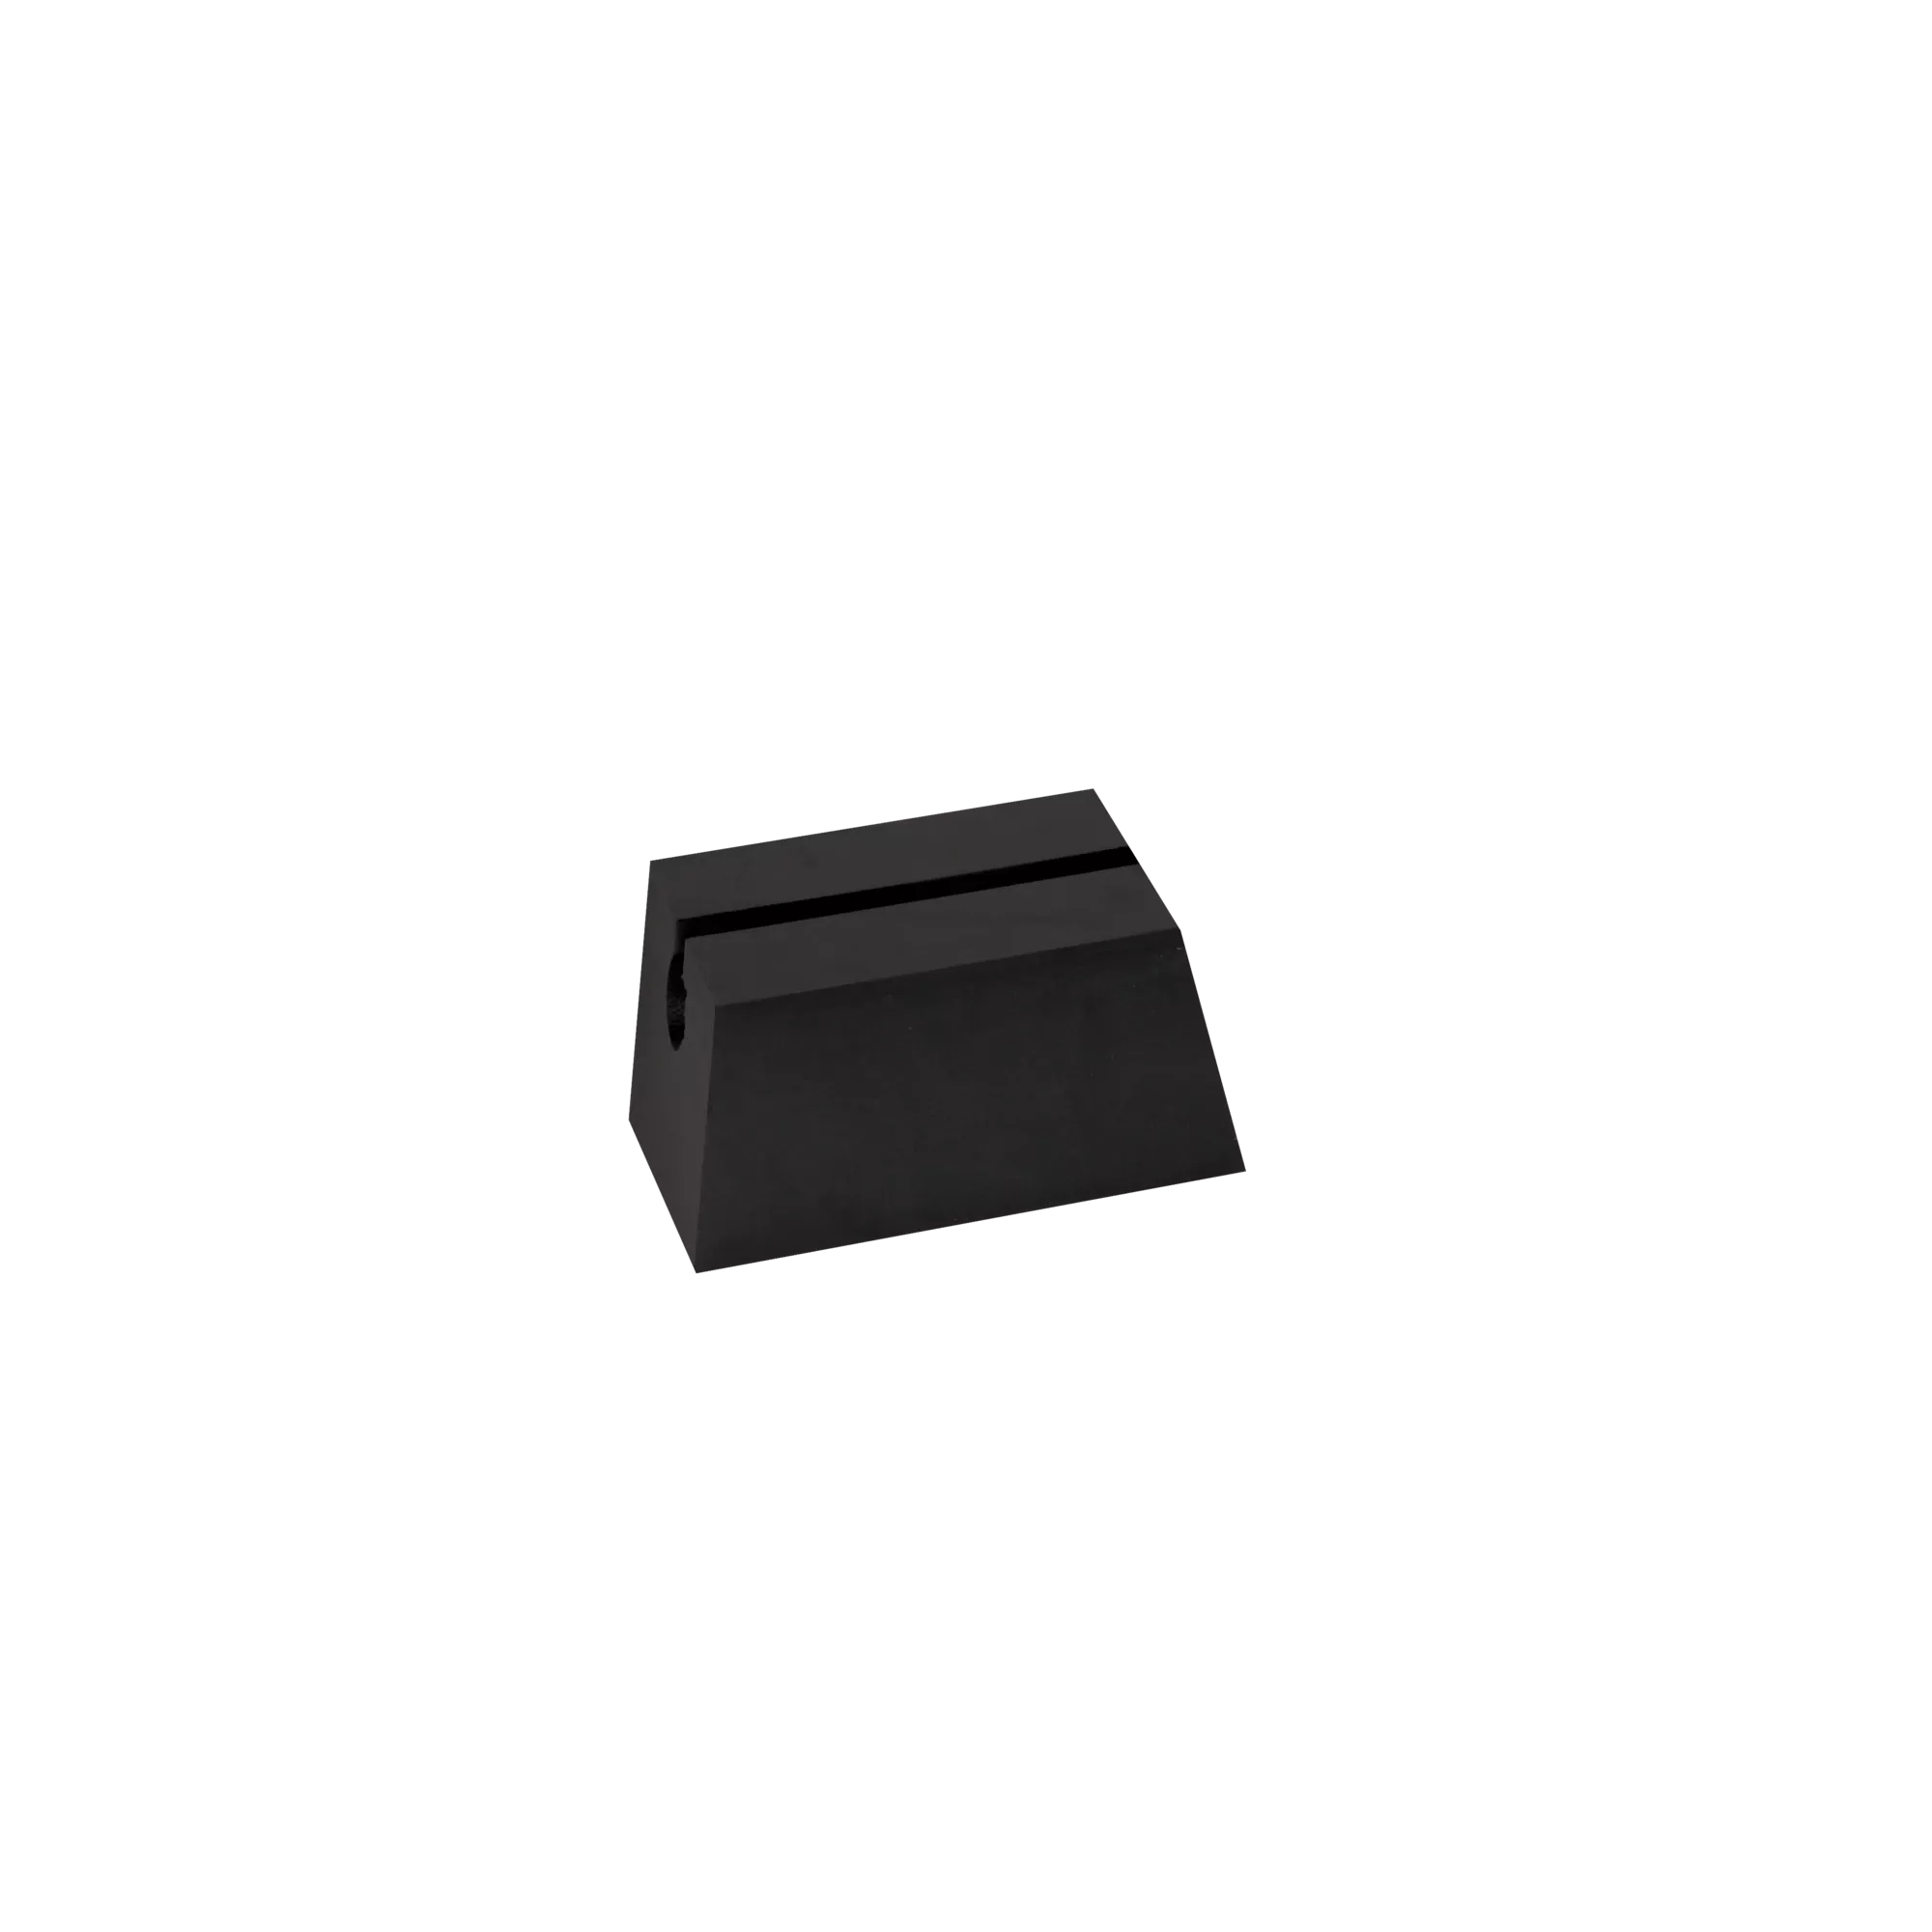 PELICAN - Foam Block for Canoe Car-Top Carrier Kit - Black - PS1961-00 - ISO